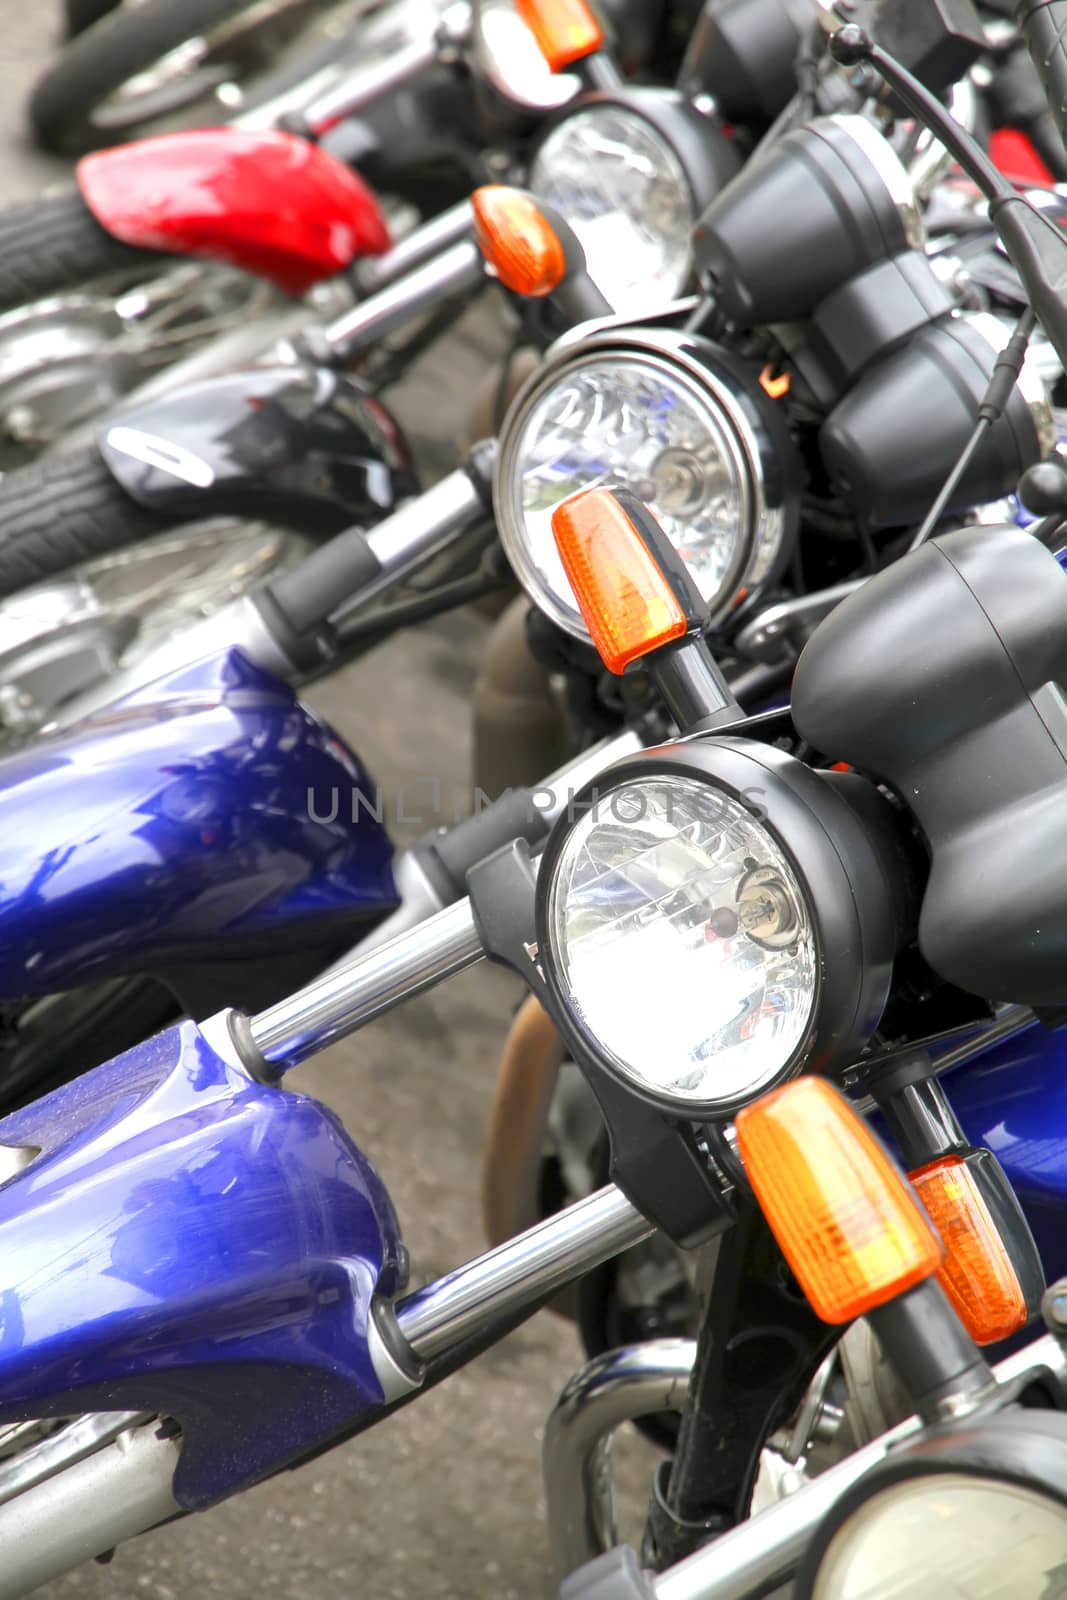 Closeup of some Motorbikes.